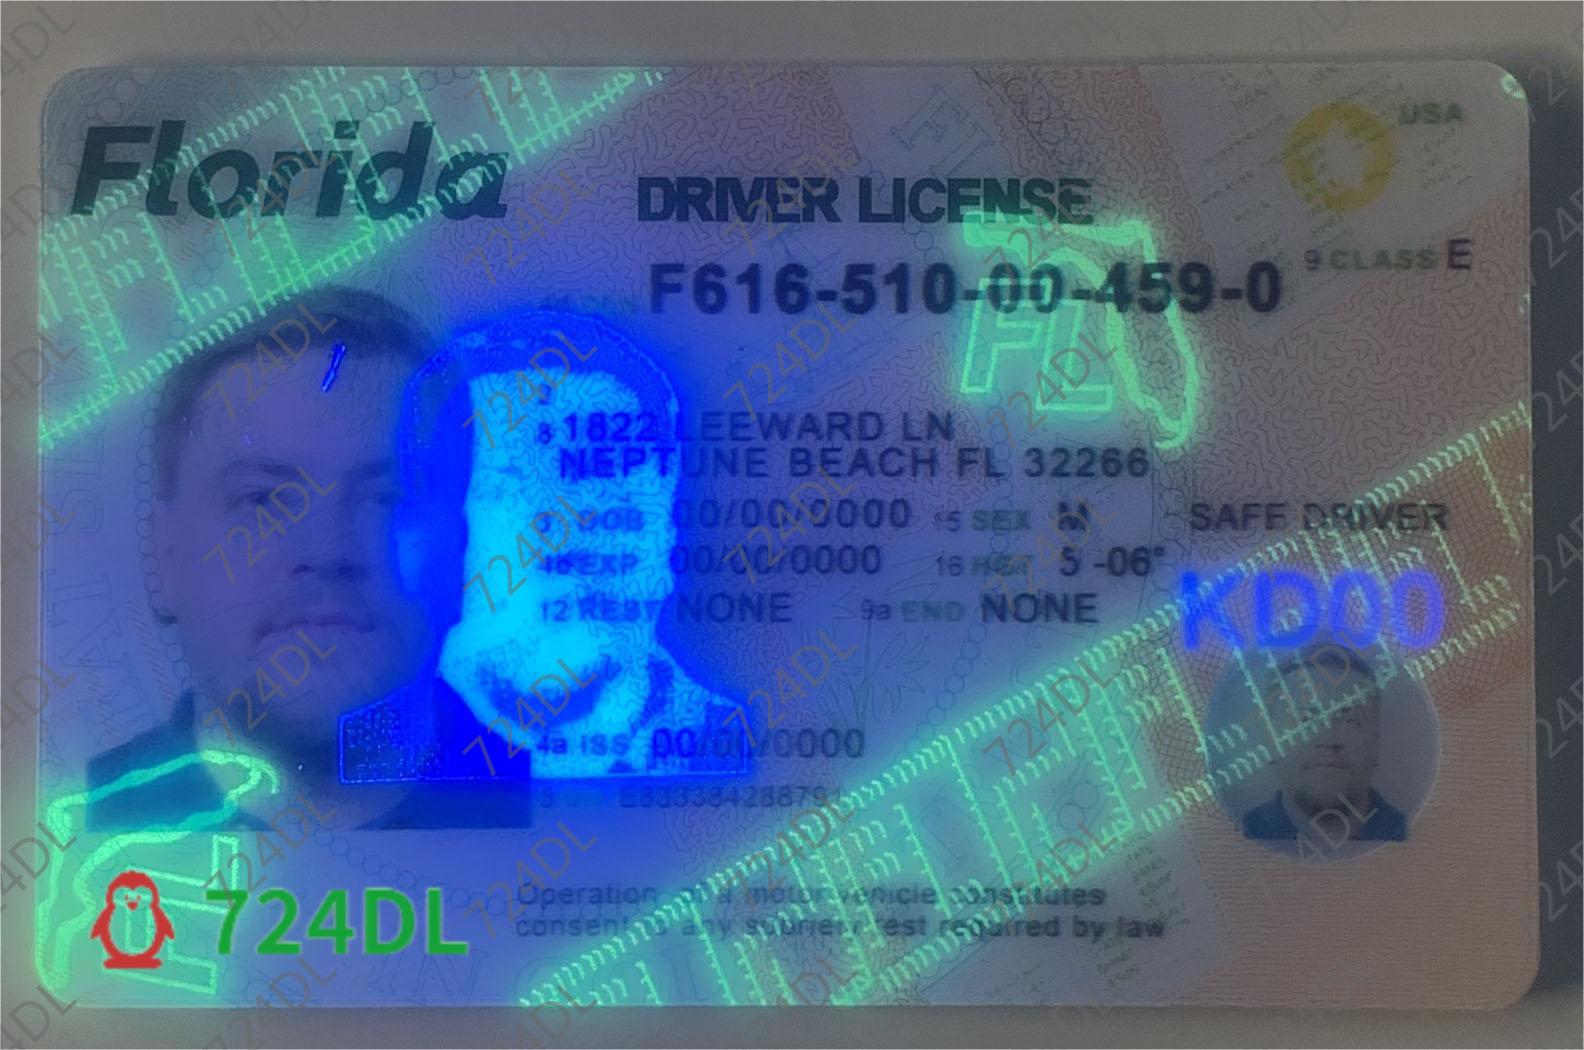 Florida State ID, Fake UT ID